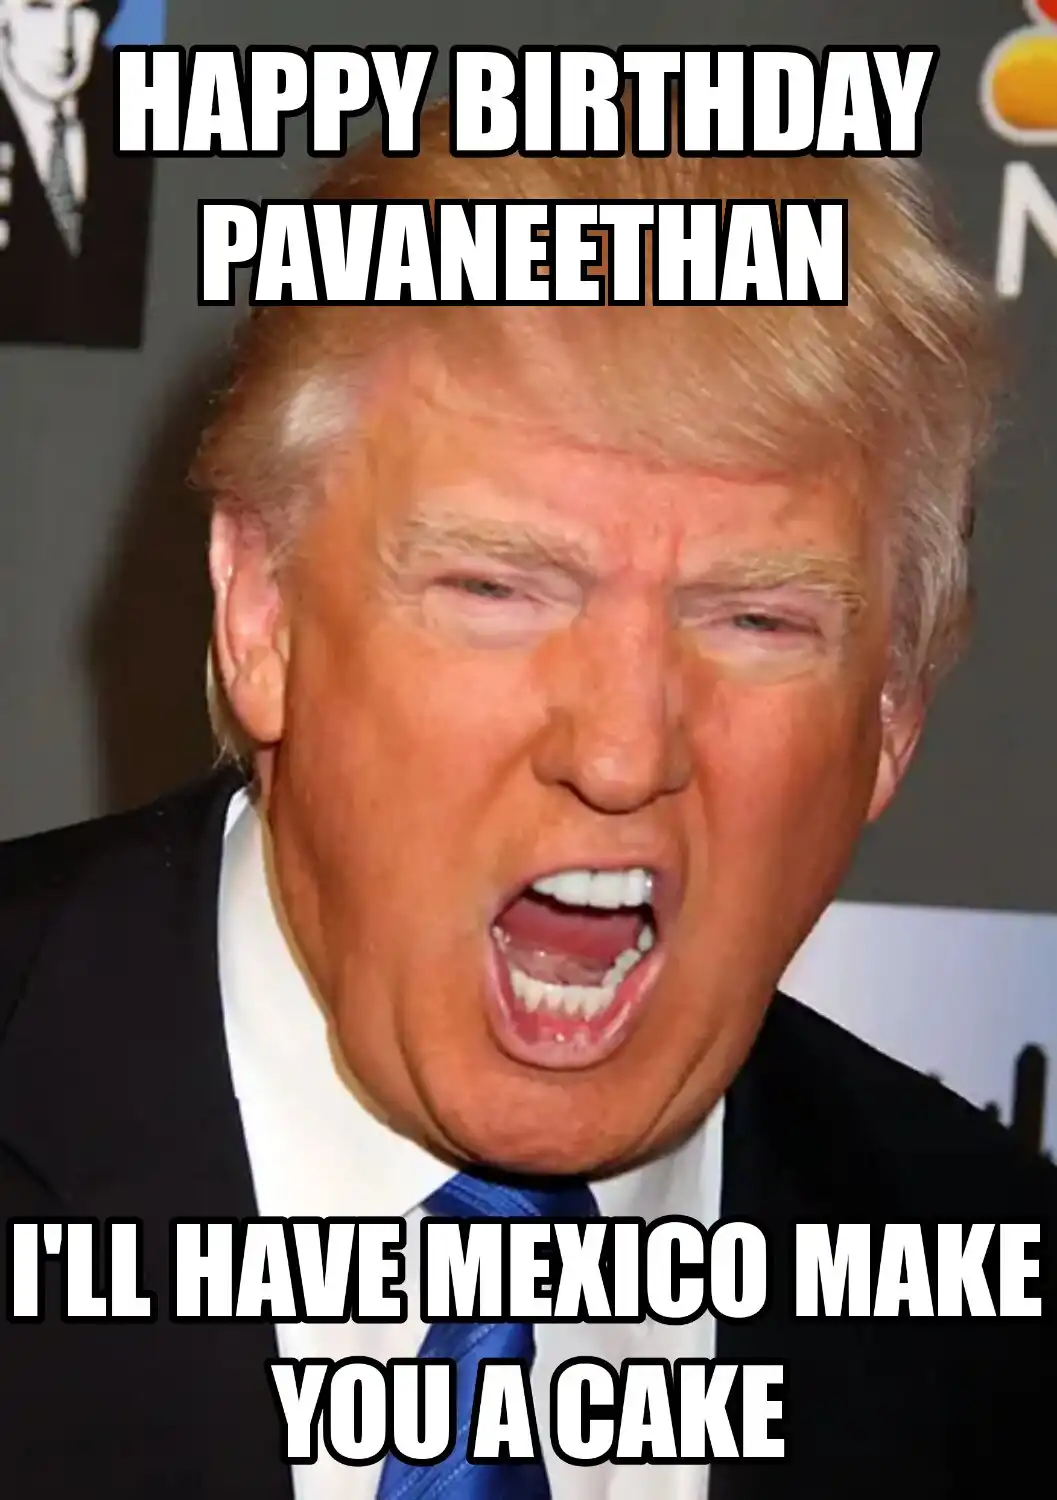 Happy Birthday Pavaneethan Mexico Make You A Cake Meme